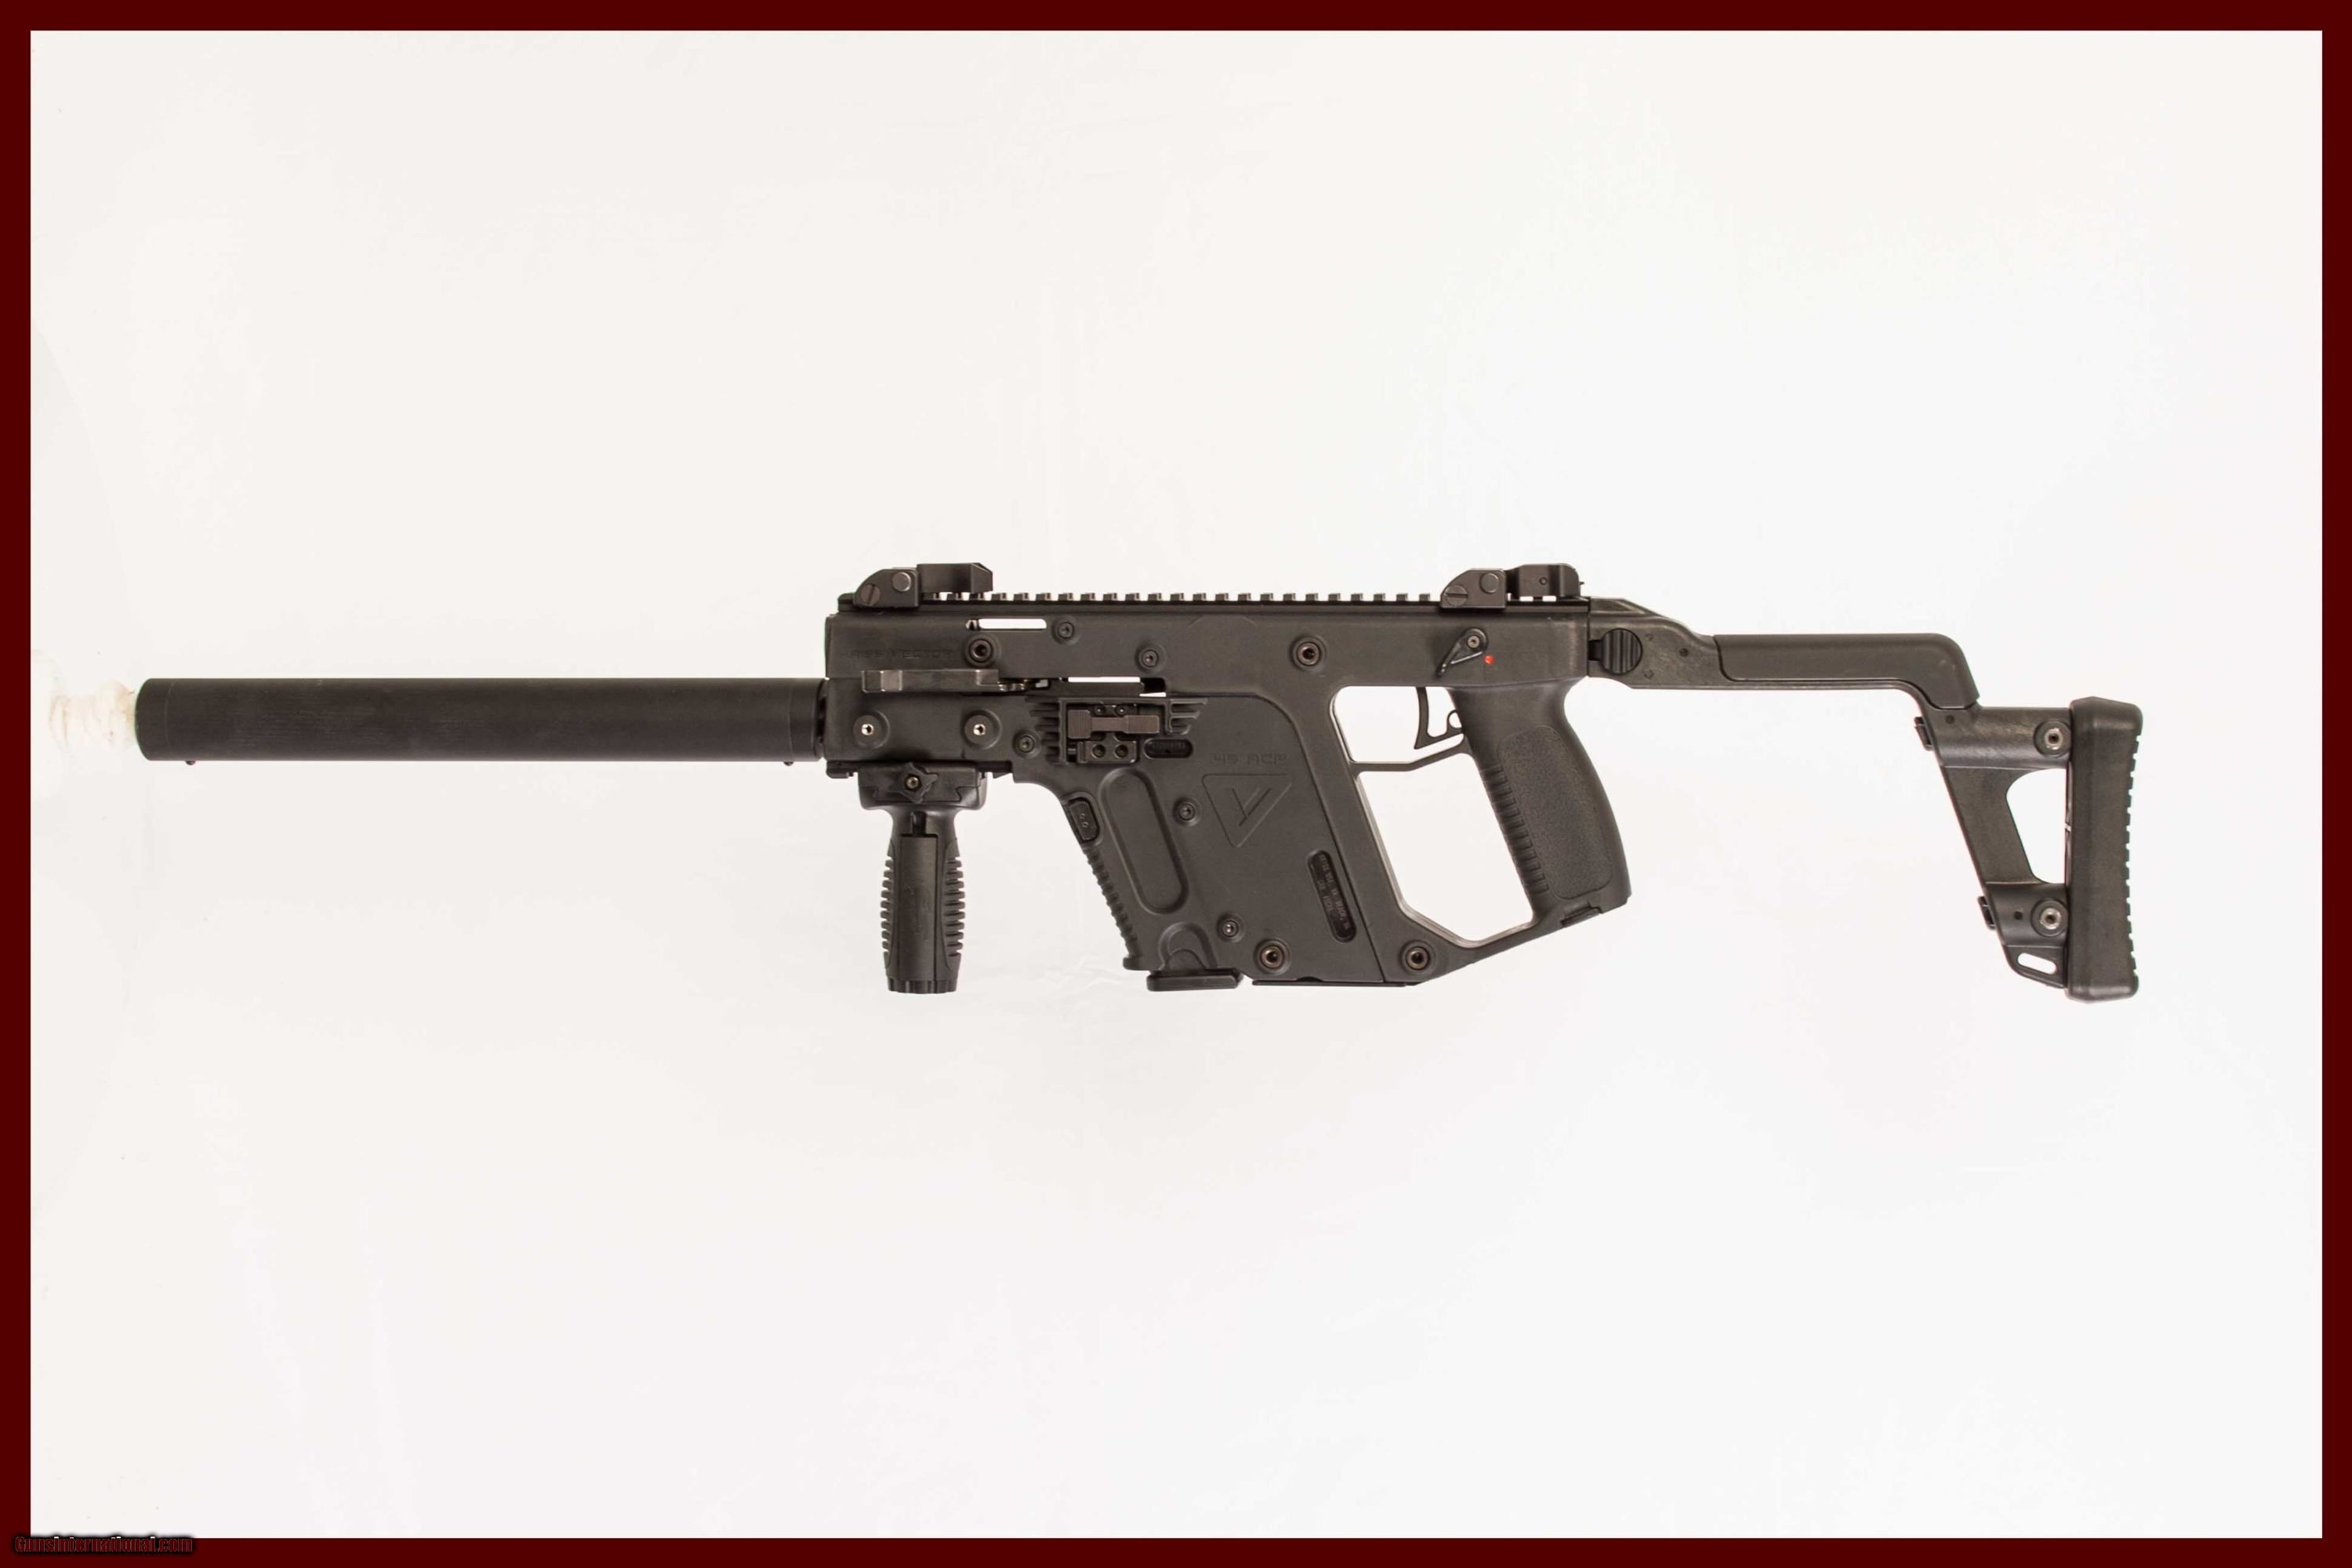 Kriss vector carbine 45 acp used gun inv 217911.